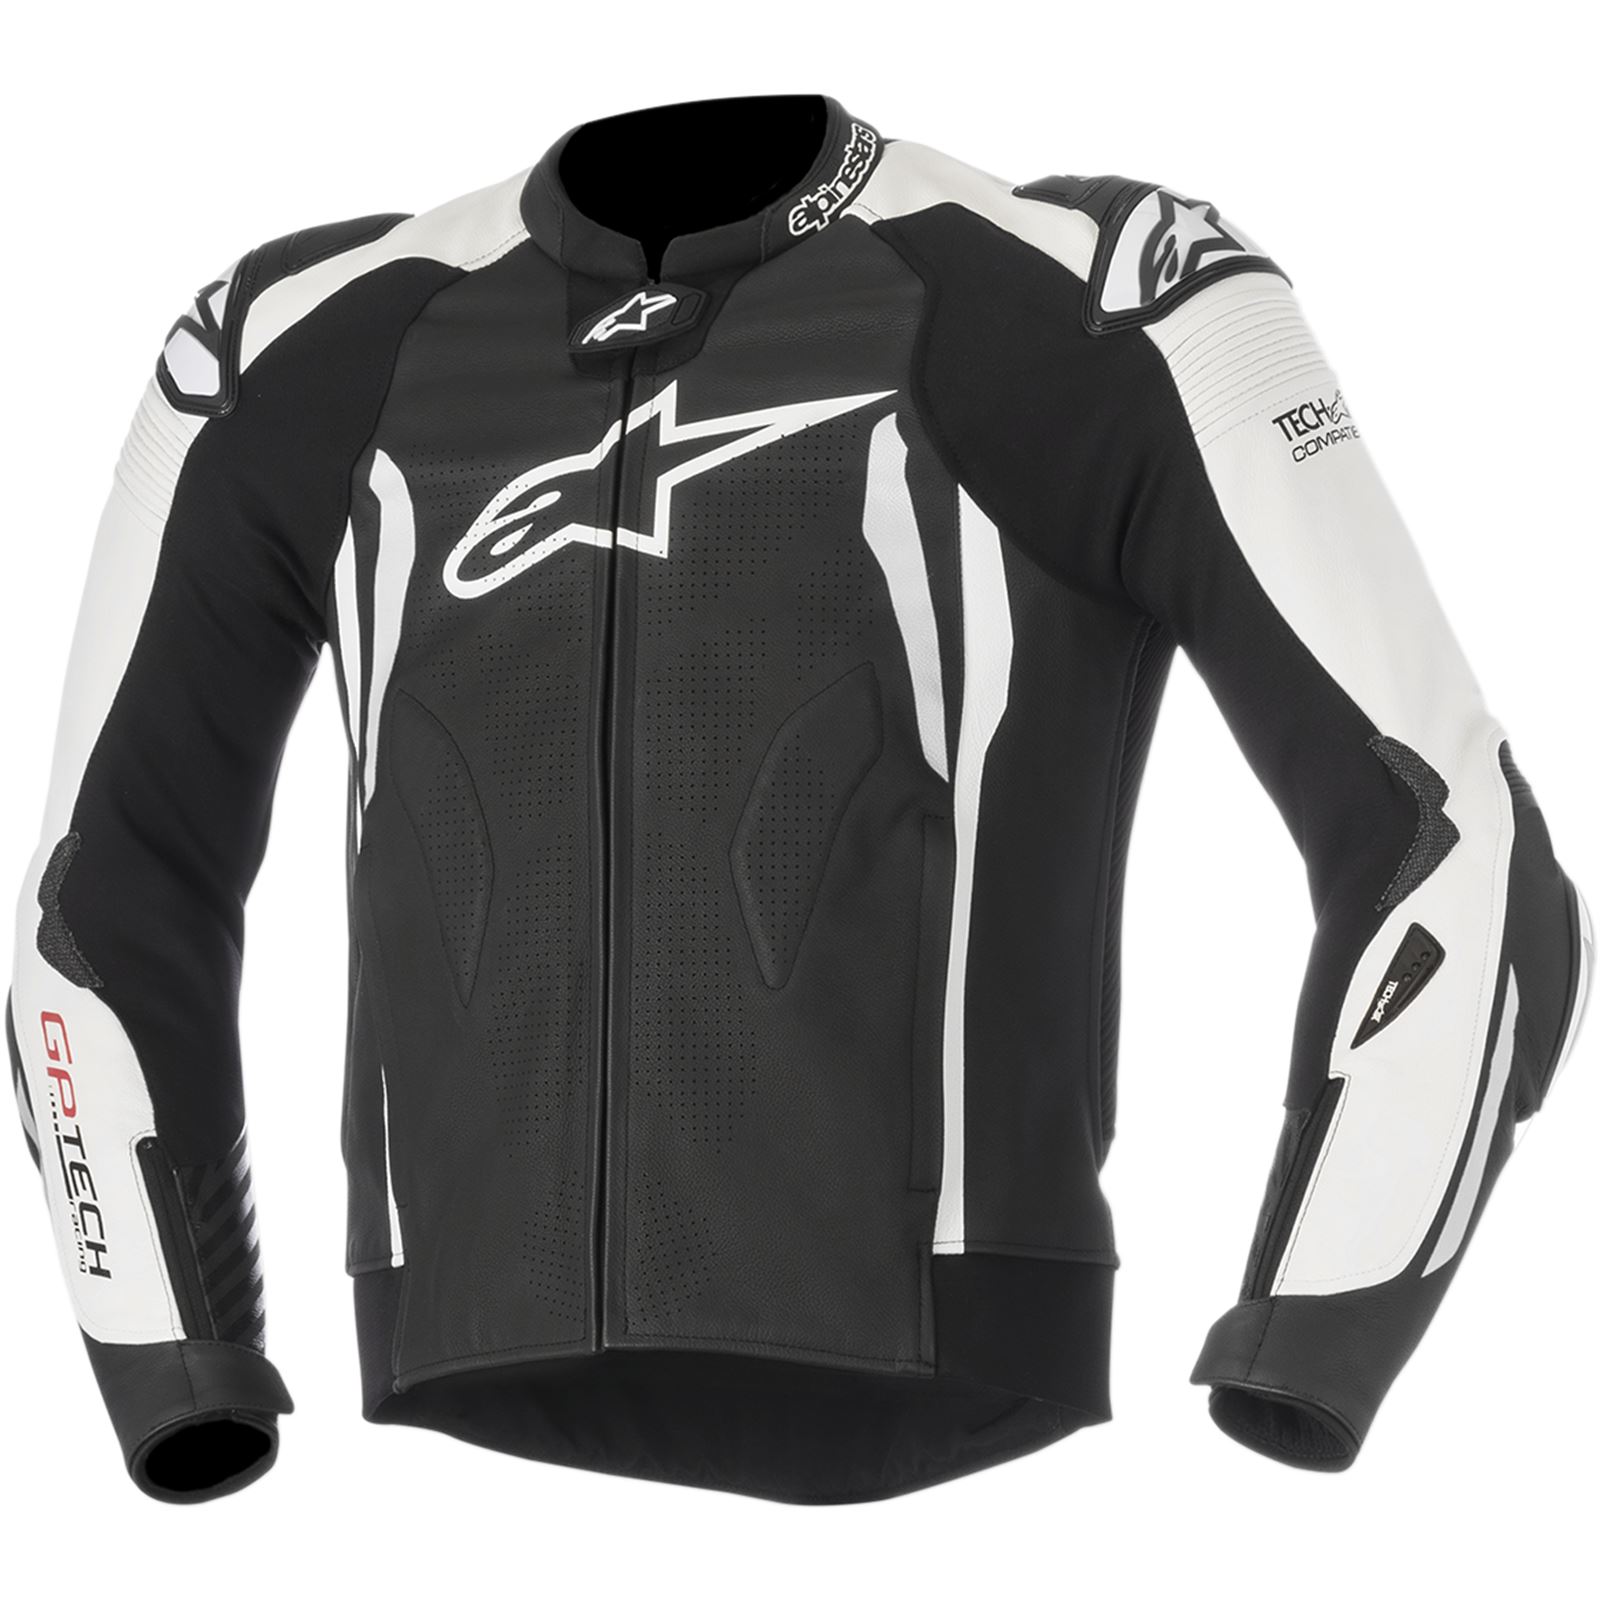 Alpinestars GP Tech v2 Jacket - Black/White - Large/X-Large